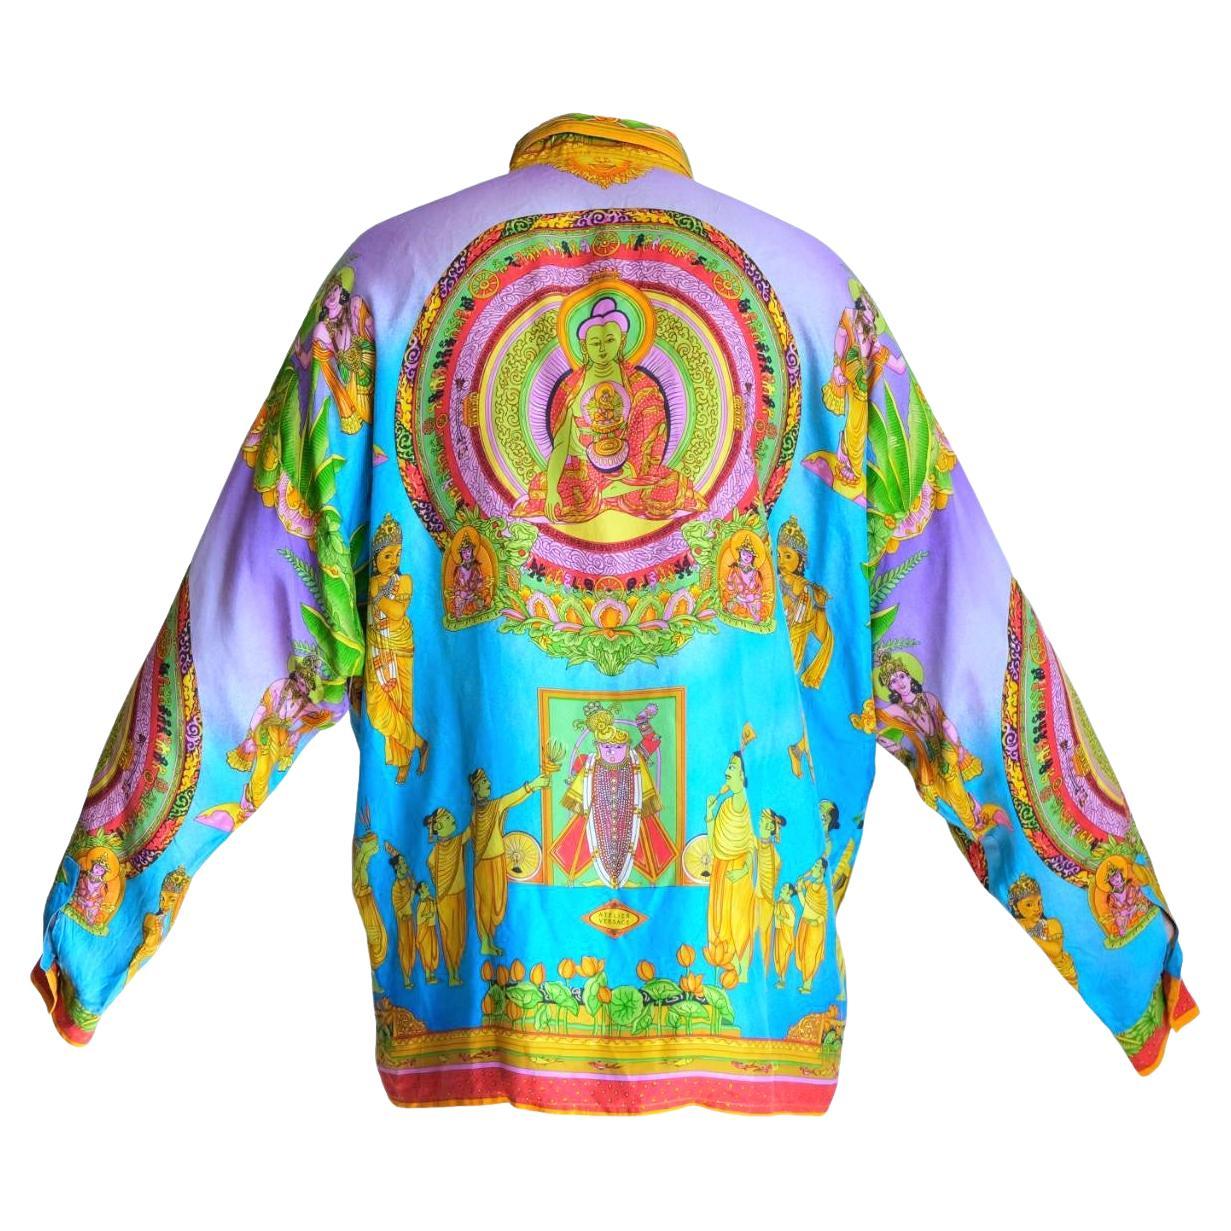 S/S 1994 Gianni Versace Buddha Printed Silk Shirt For Sale